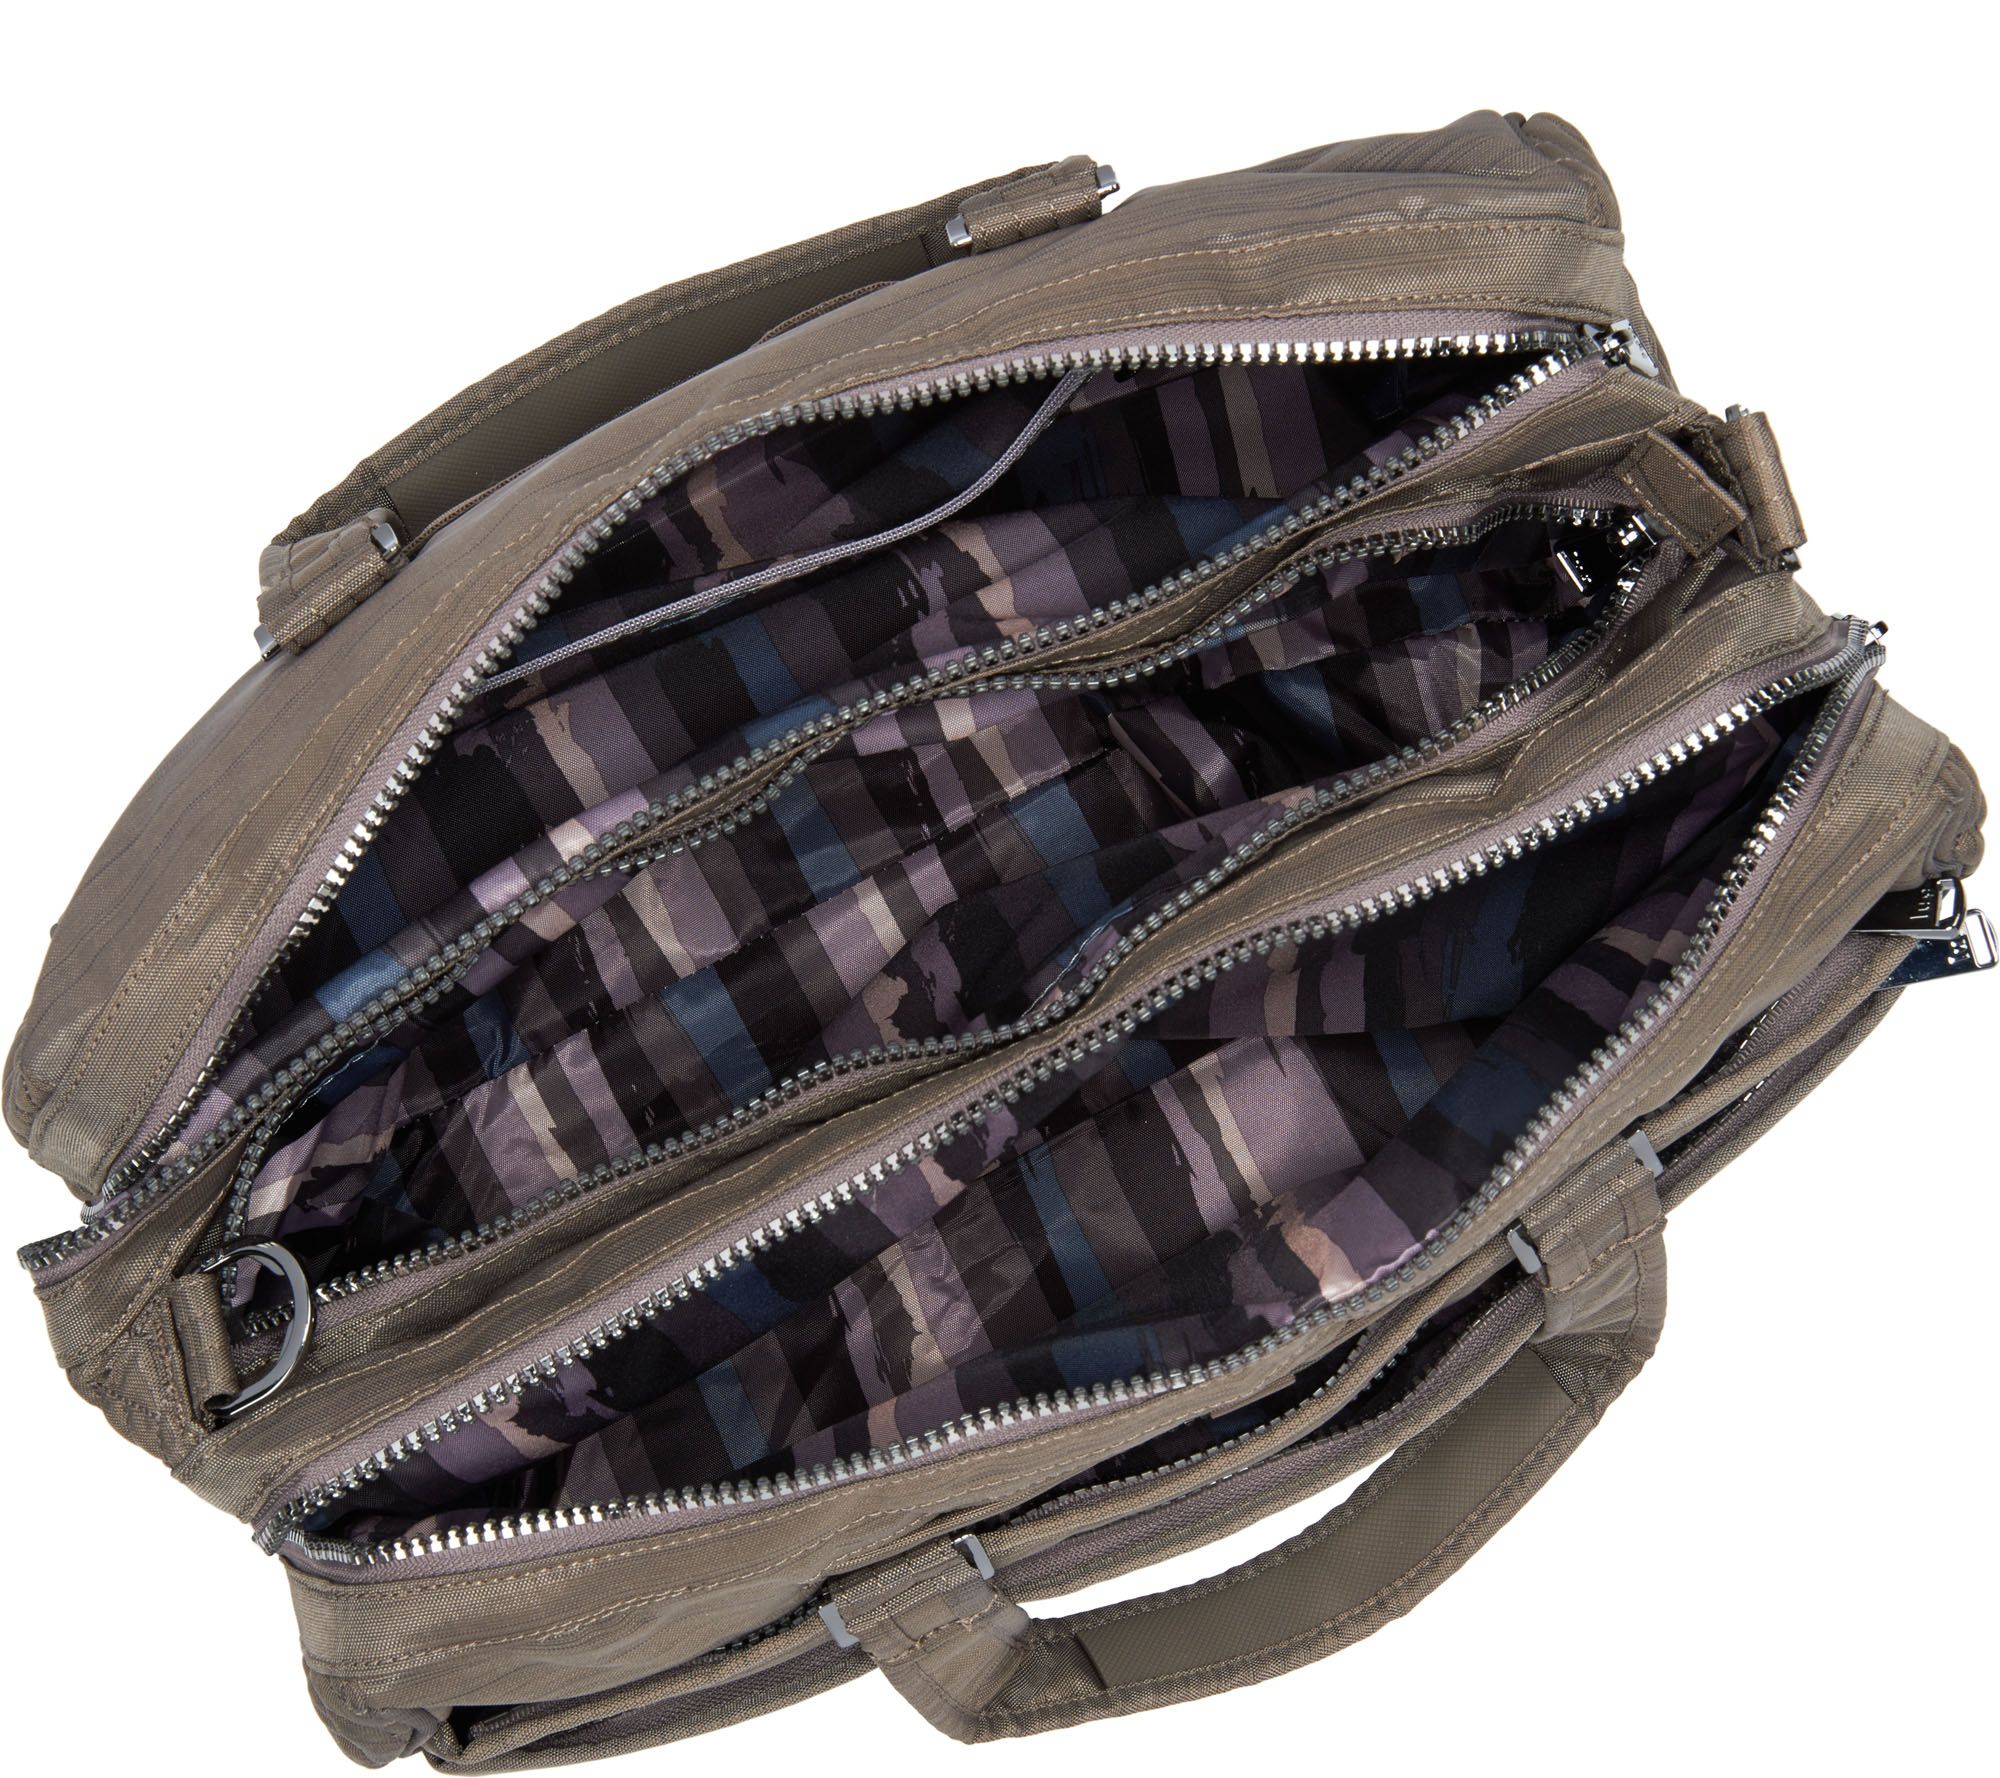 carlattias wearing « PINÈDE » Twilly on Calvi bag 🤍